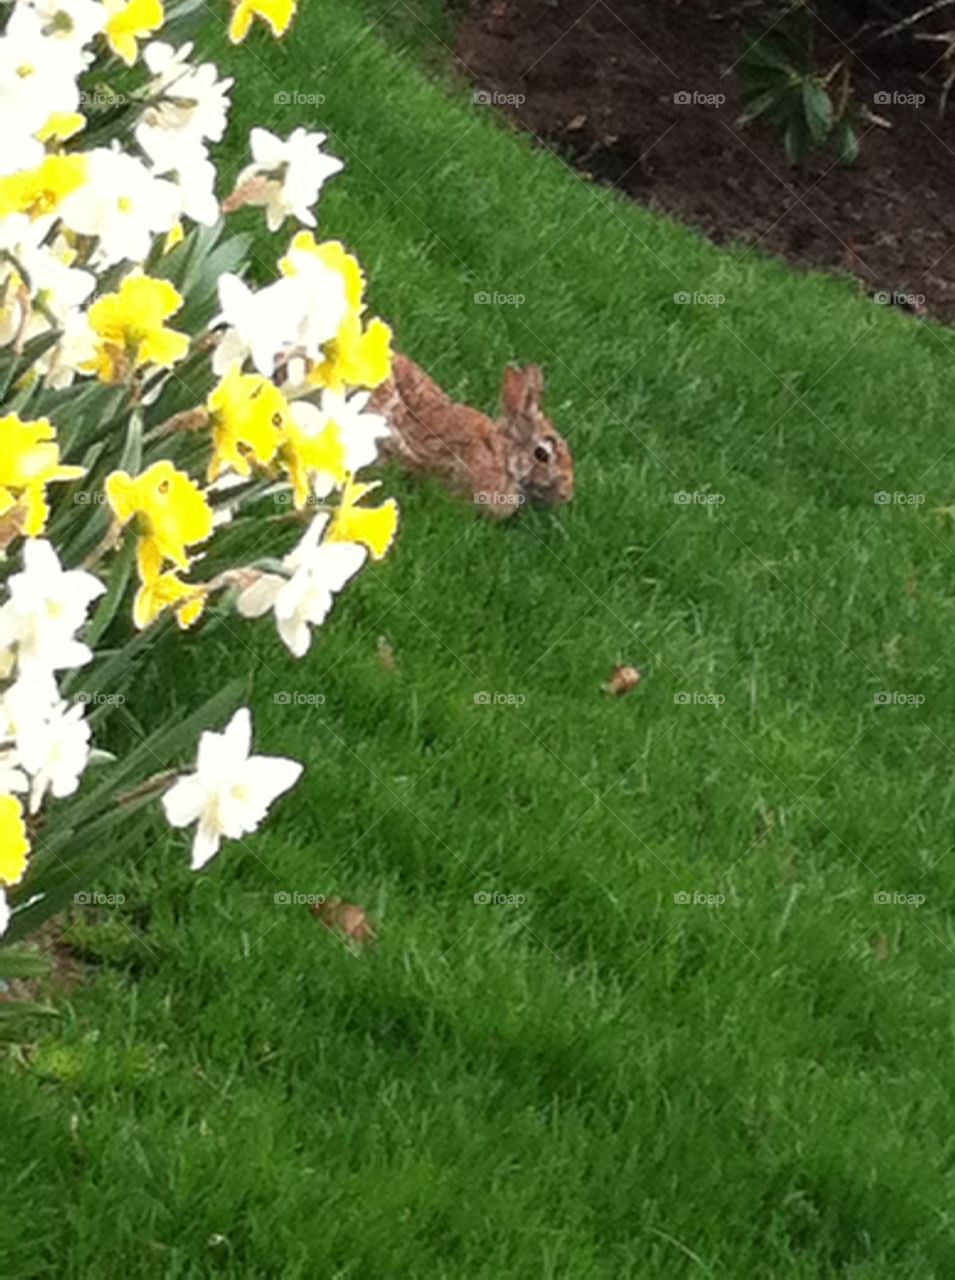 Wild rabbit hiding behind Daffodils